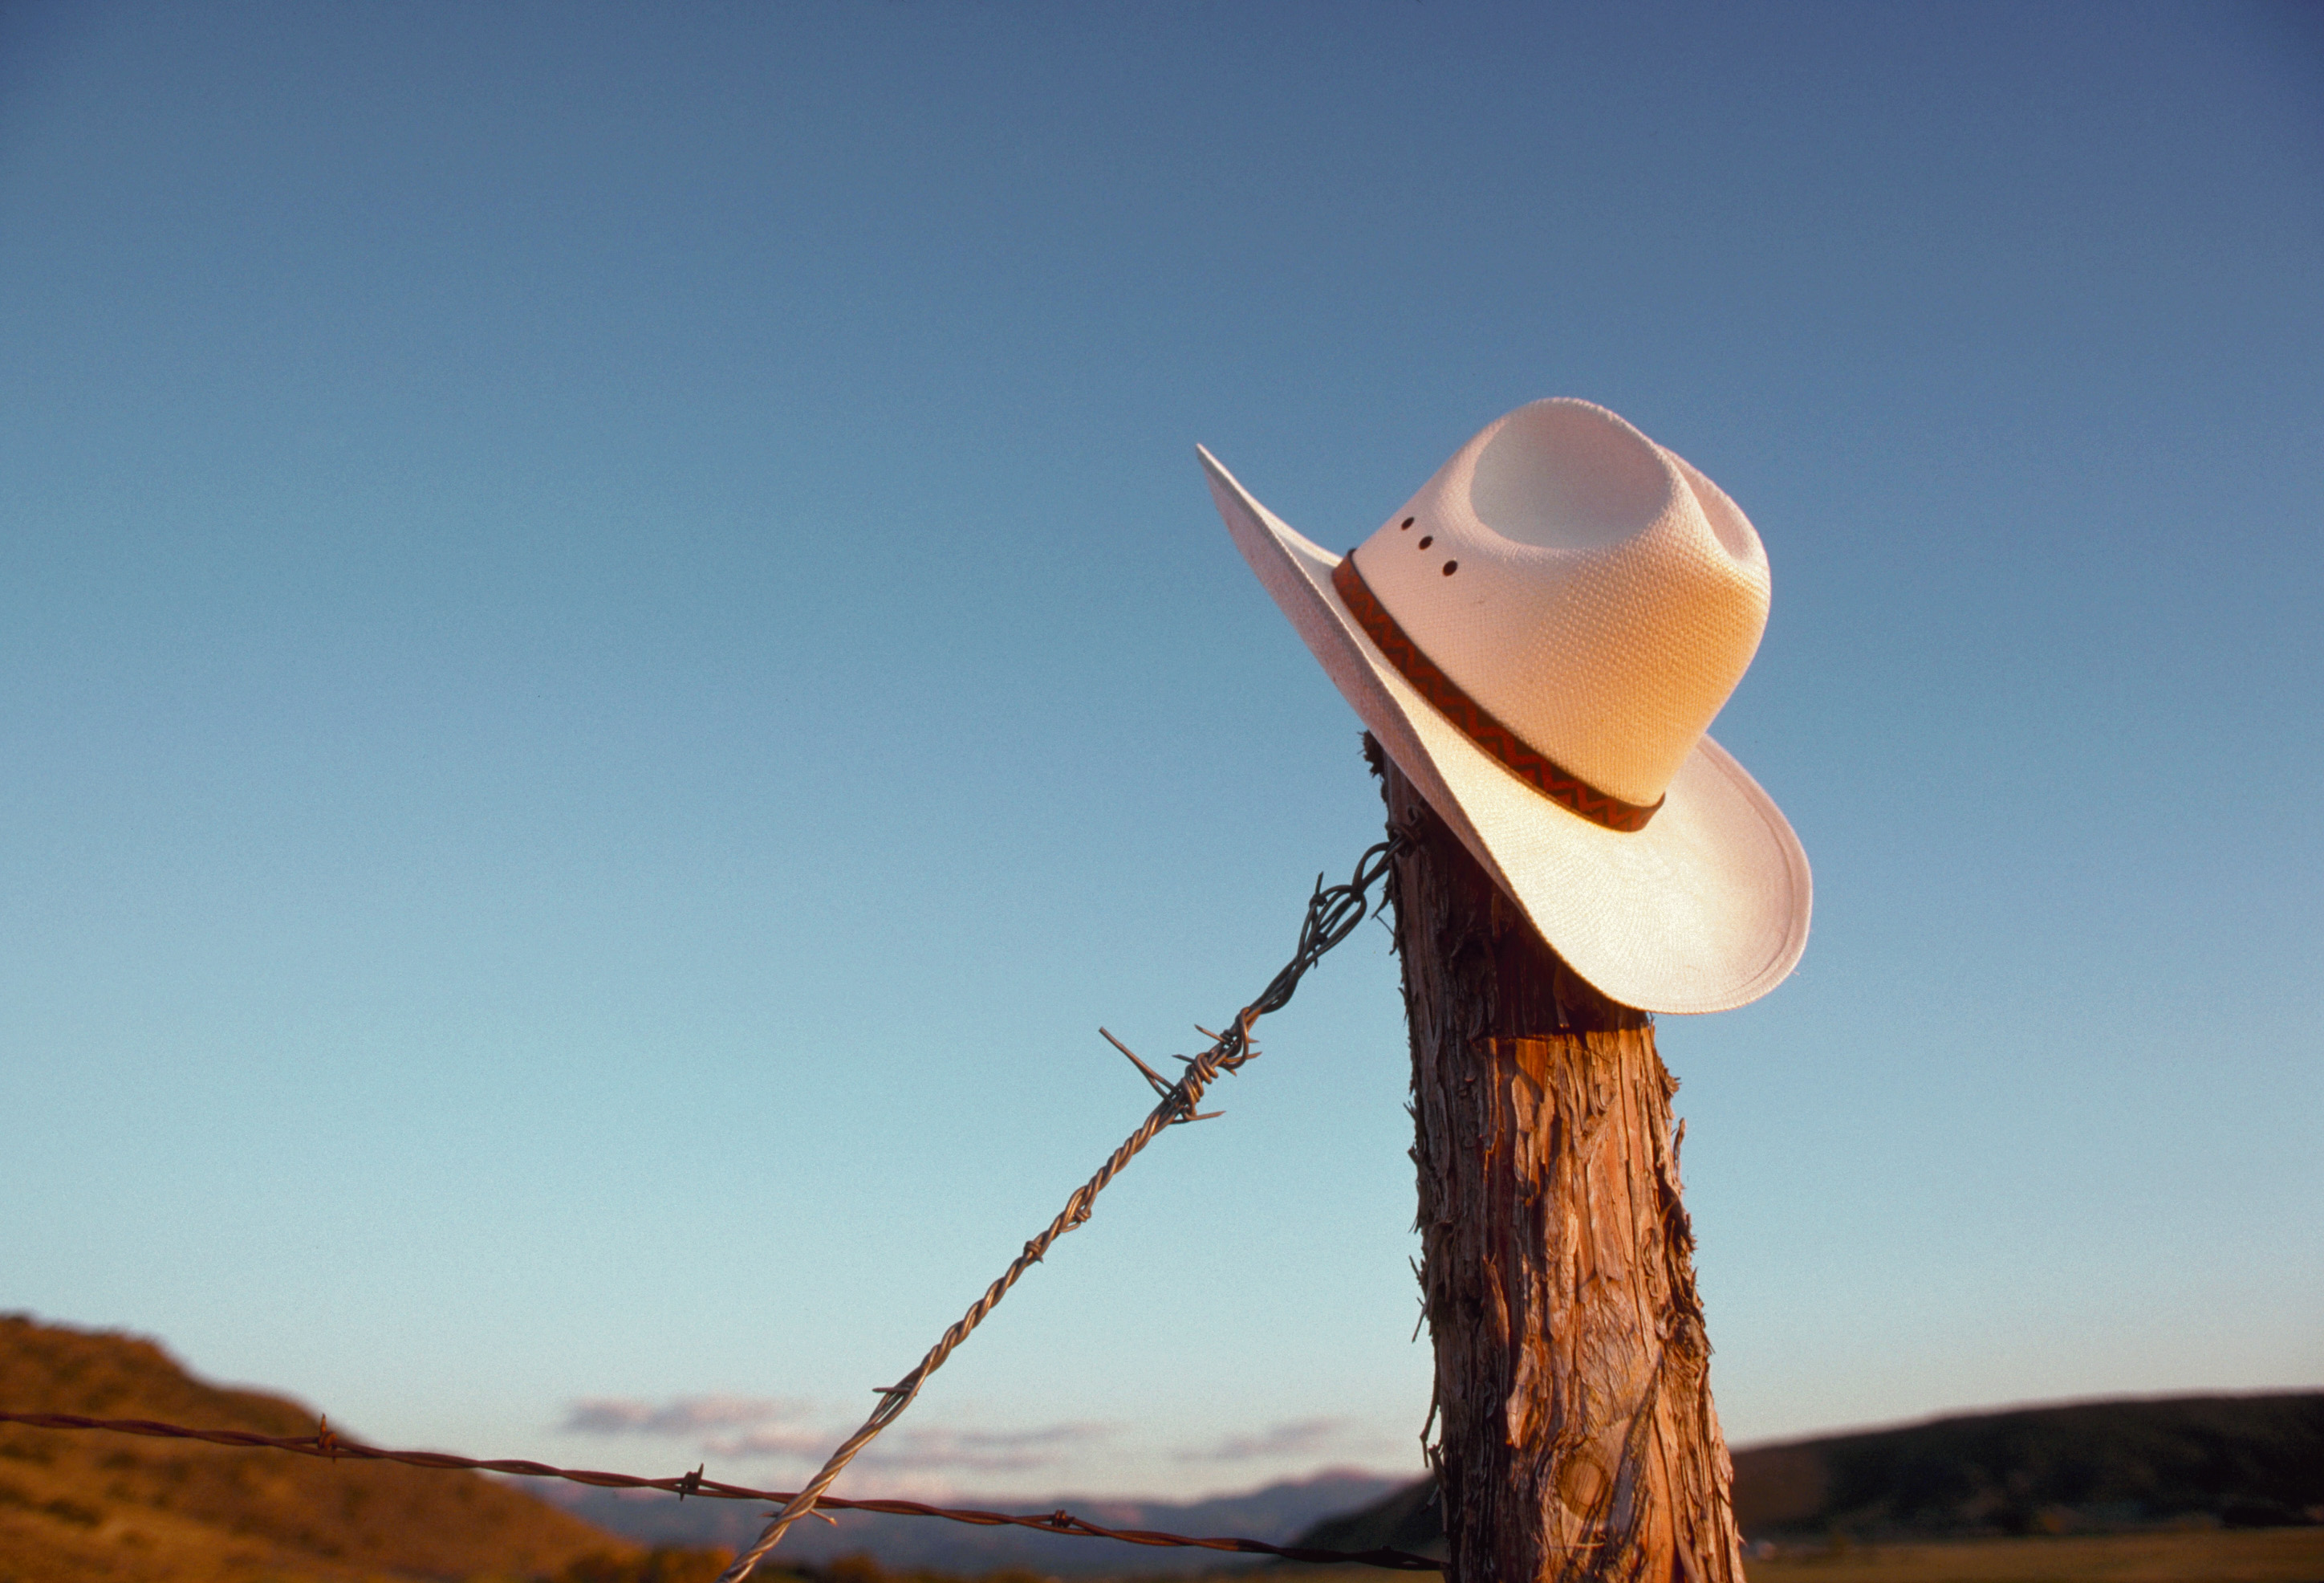 a cowboy hat on a pole